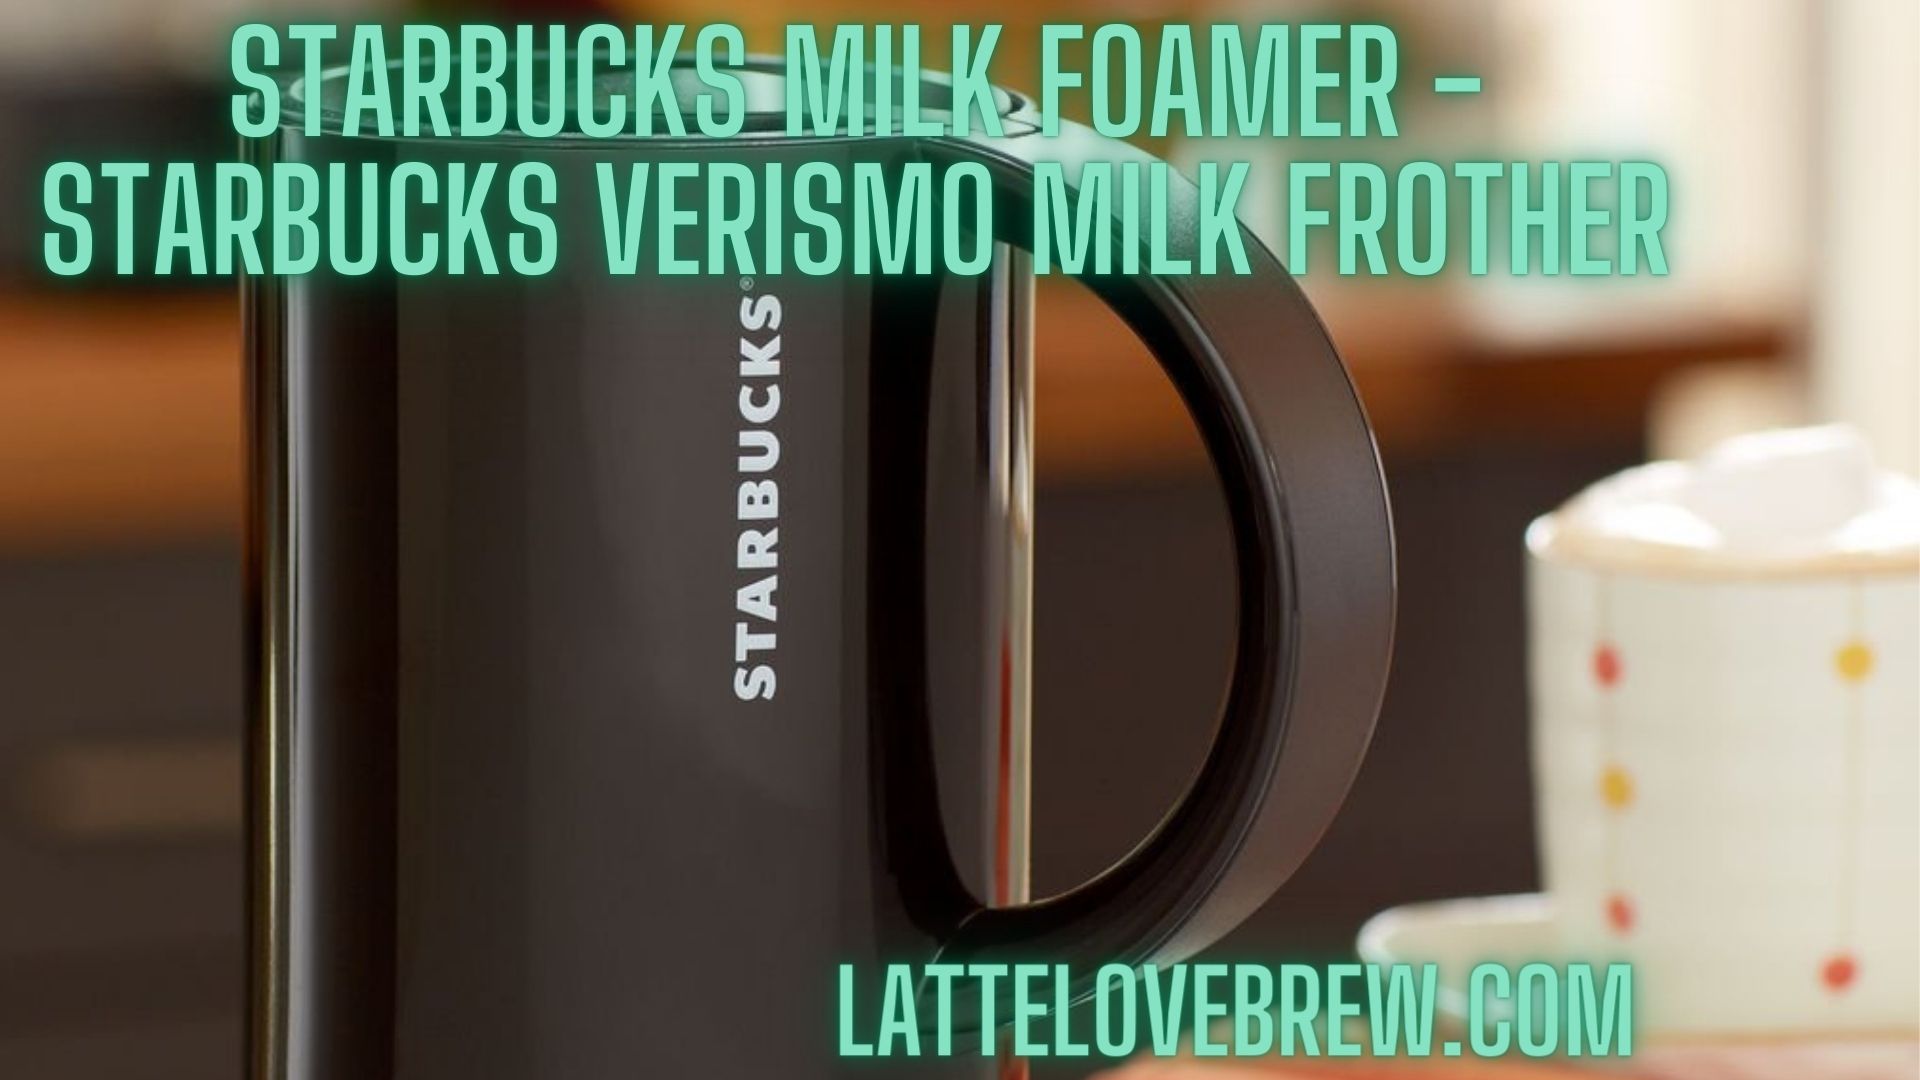 Starbucks Milk Foamer - Starbucks Verismo Milk Frother - Latte